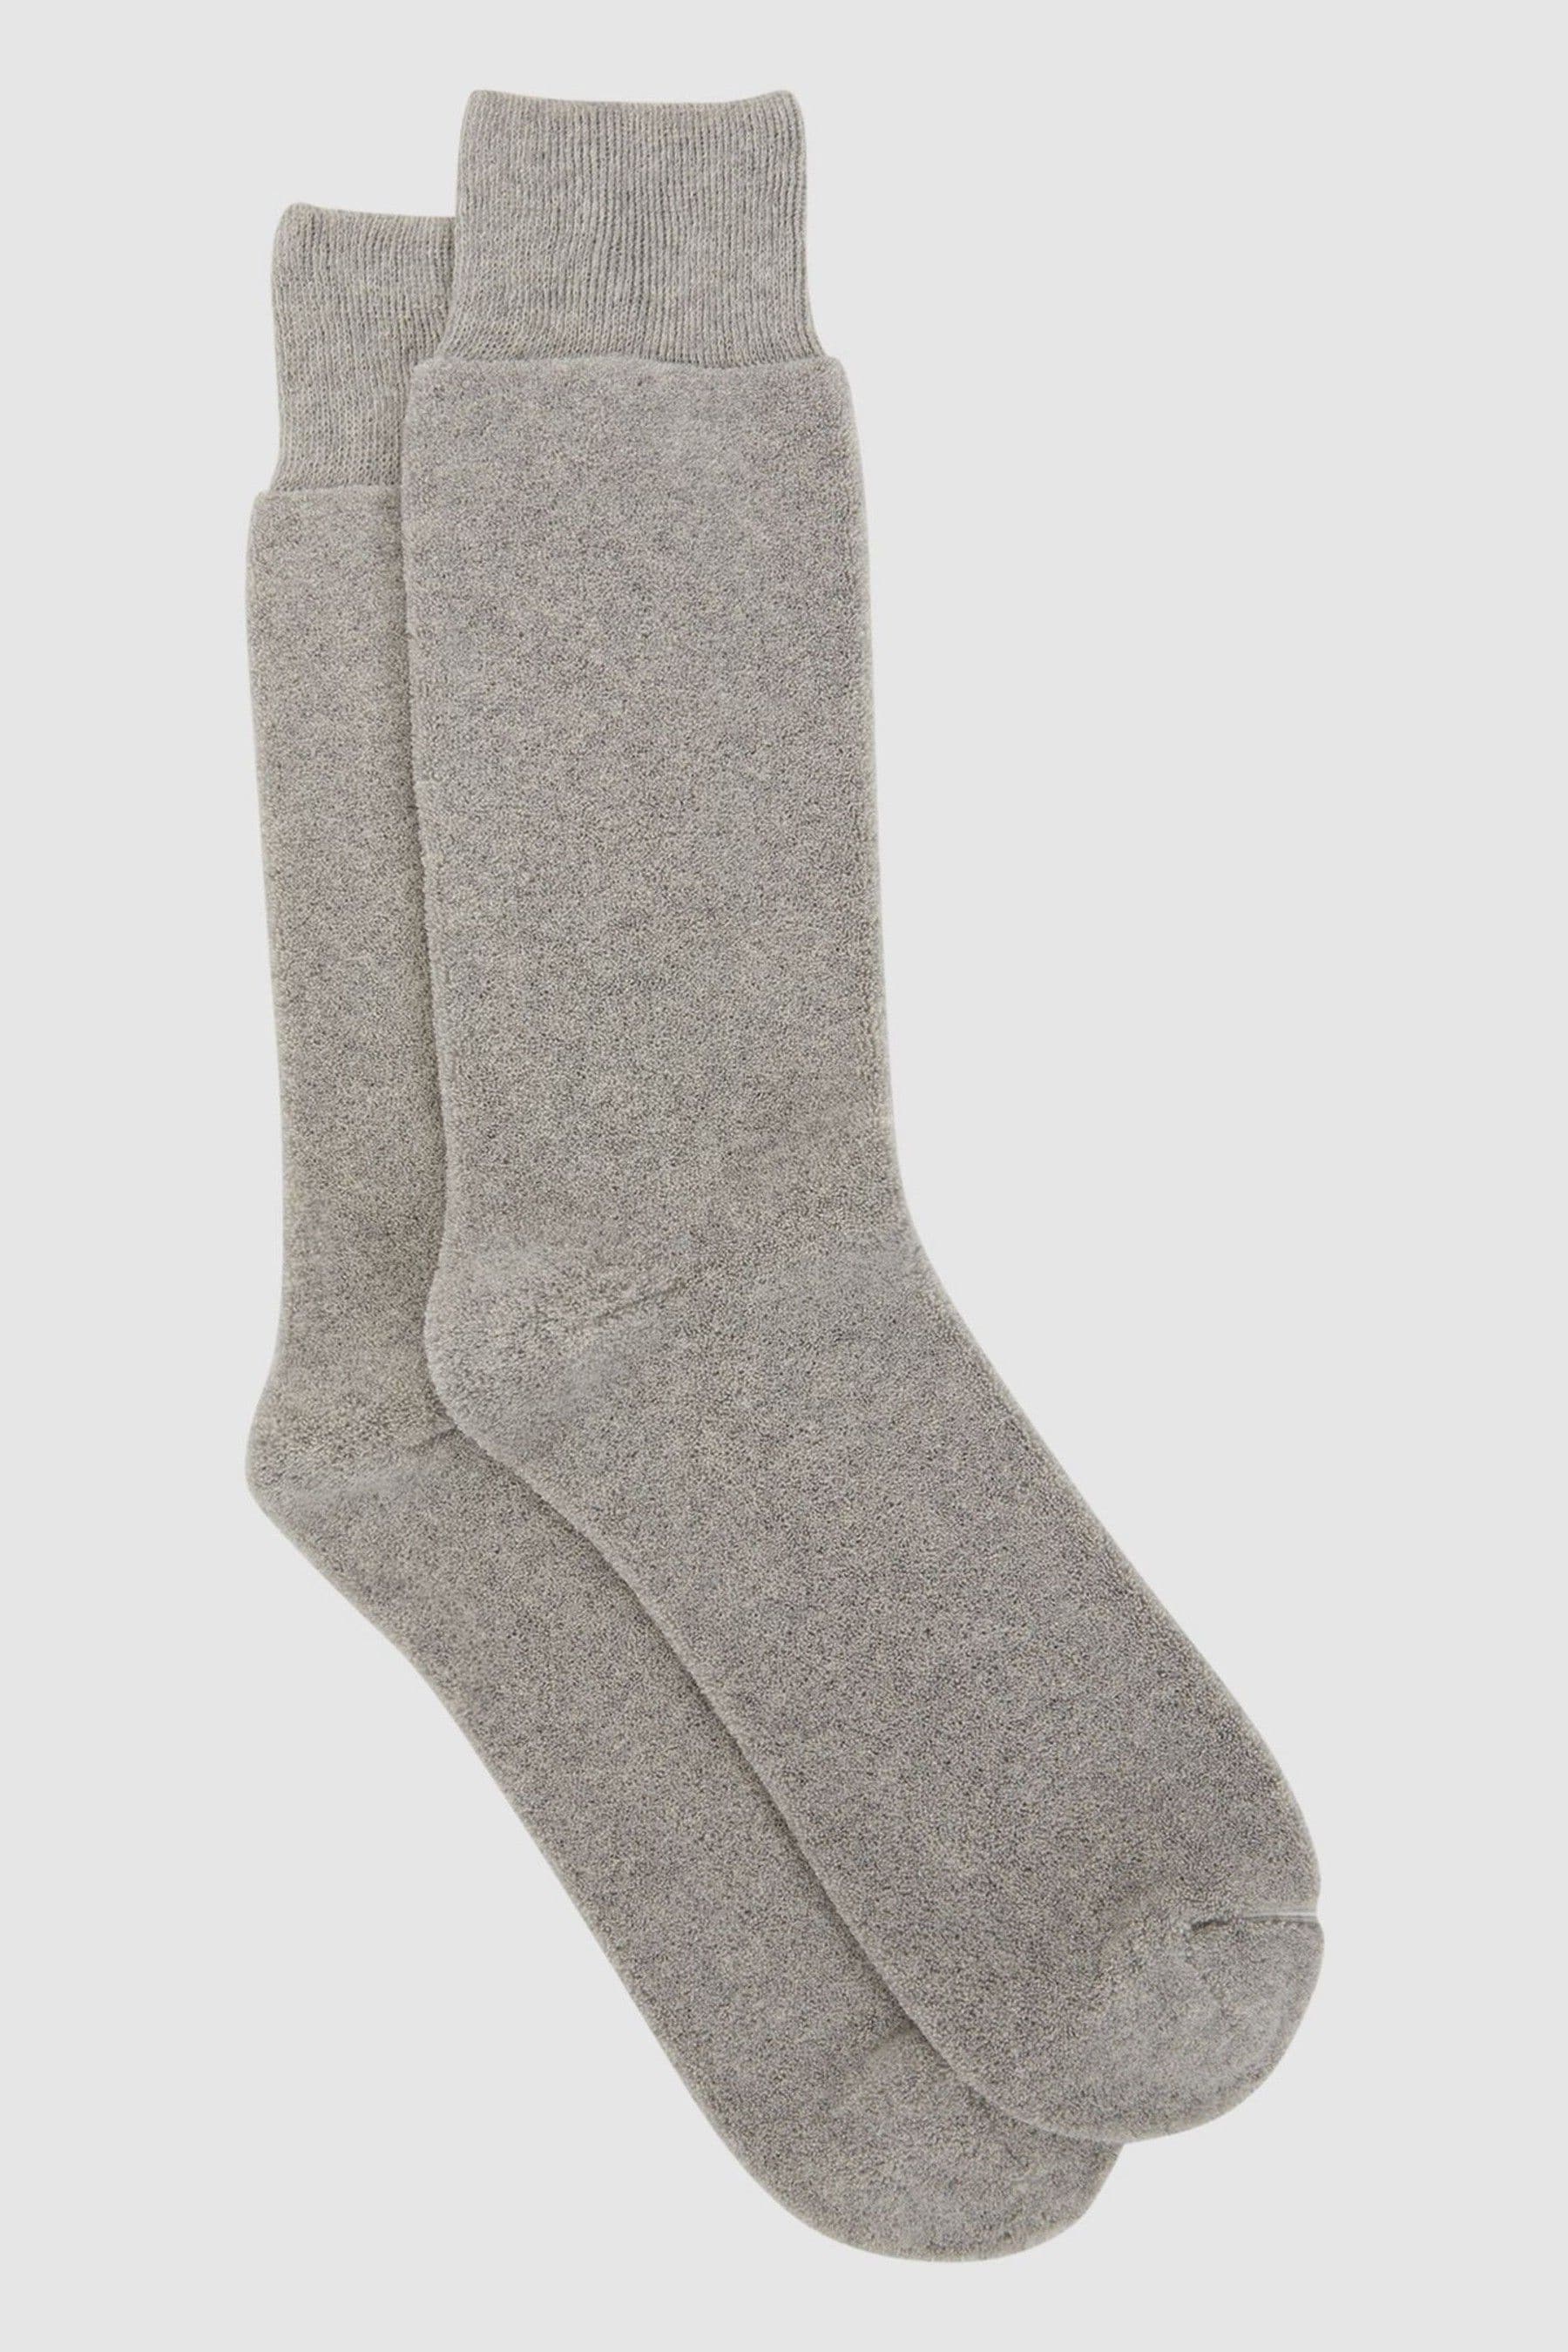 Reiss Alers - Grey Melange Cotton Blend Terry Towelling Socks, S/m